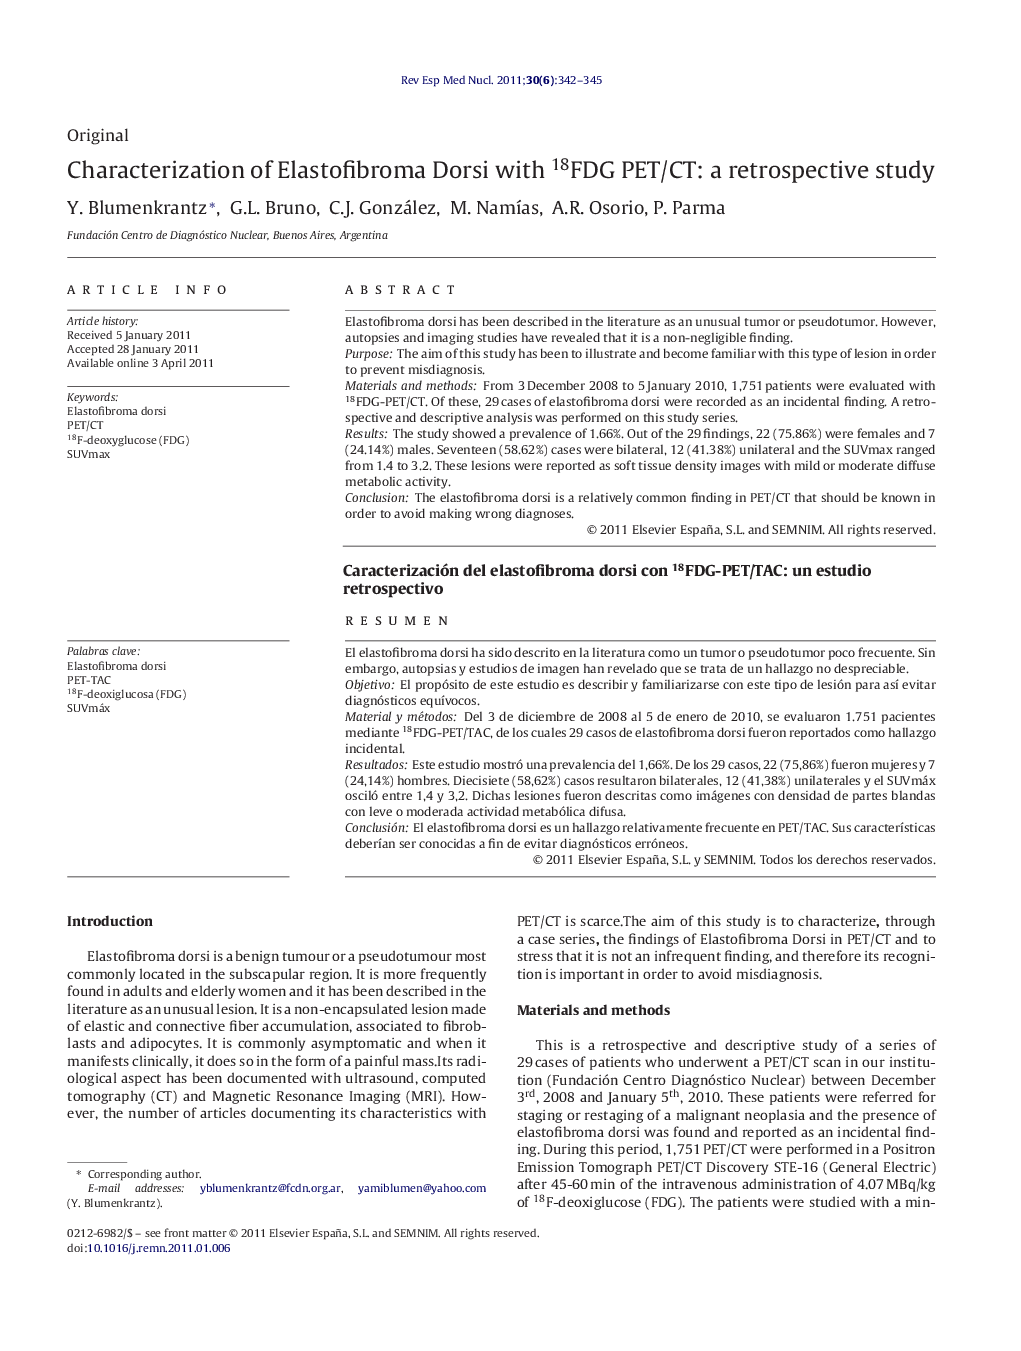 Characterization of Elastofibroma Dorsi with 18FDG PET/CT: a retrospective study